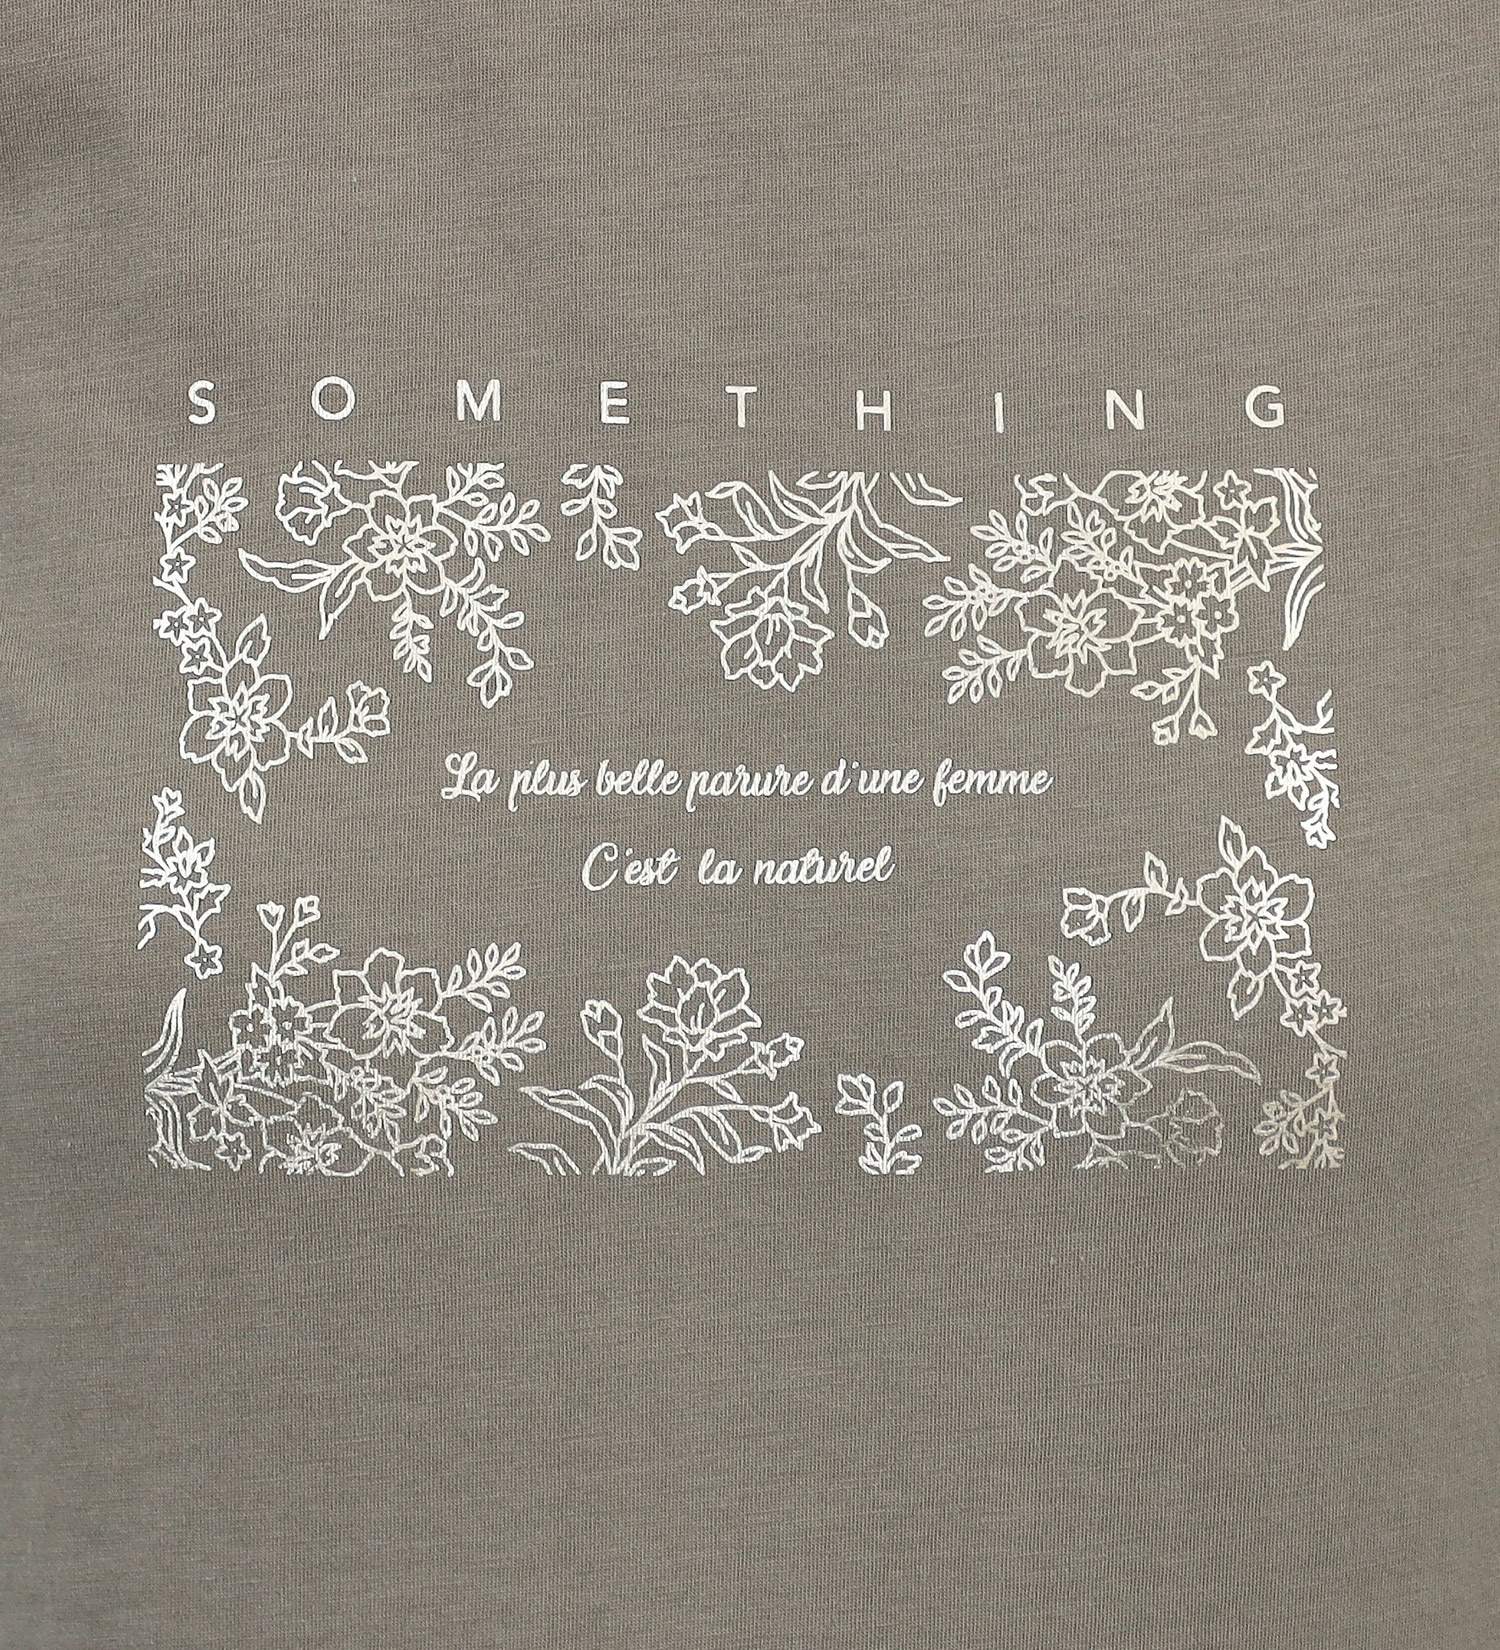 SOMETHING(サムシング)のSOMETHING フォイルプリントTシャツ【長袖】|トップス/Tシャツ/カットソー/レディース|チャコール